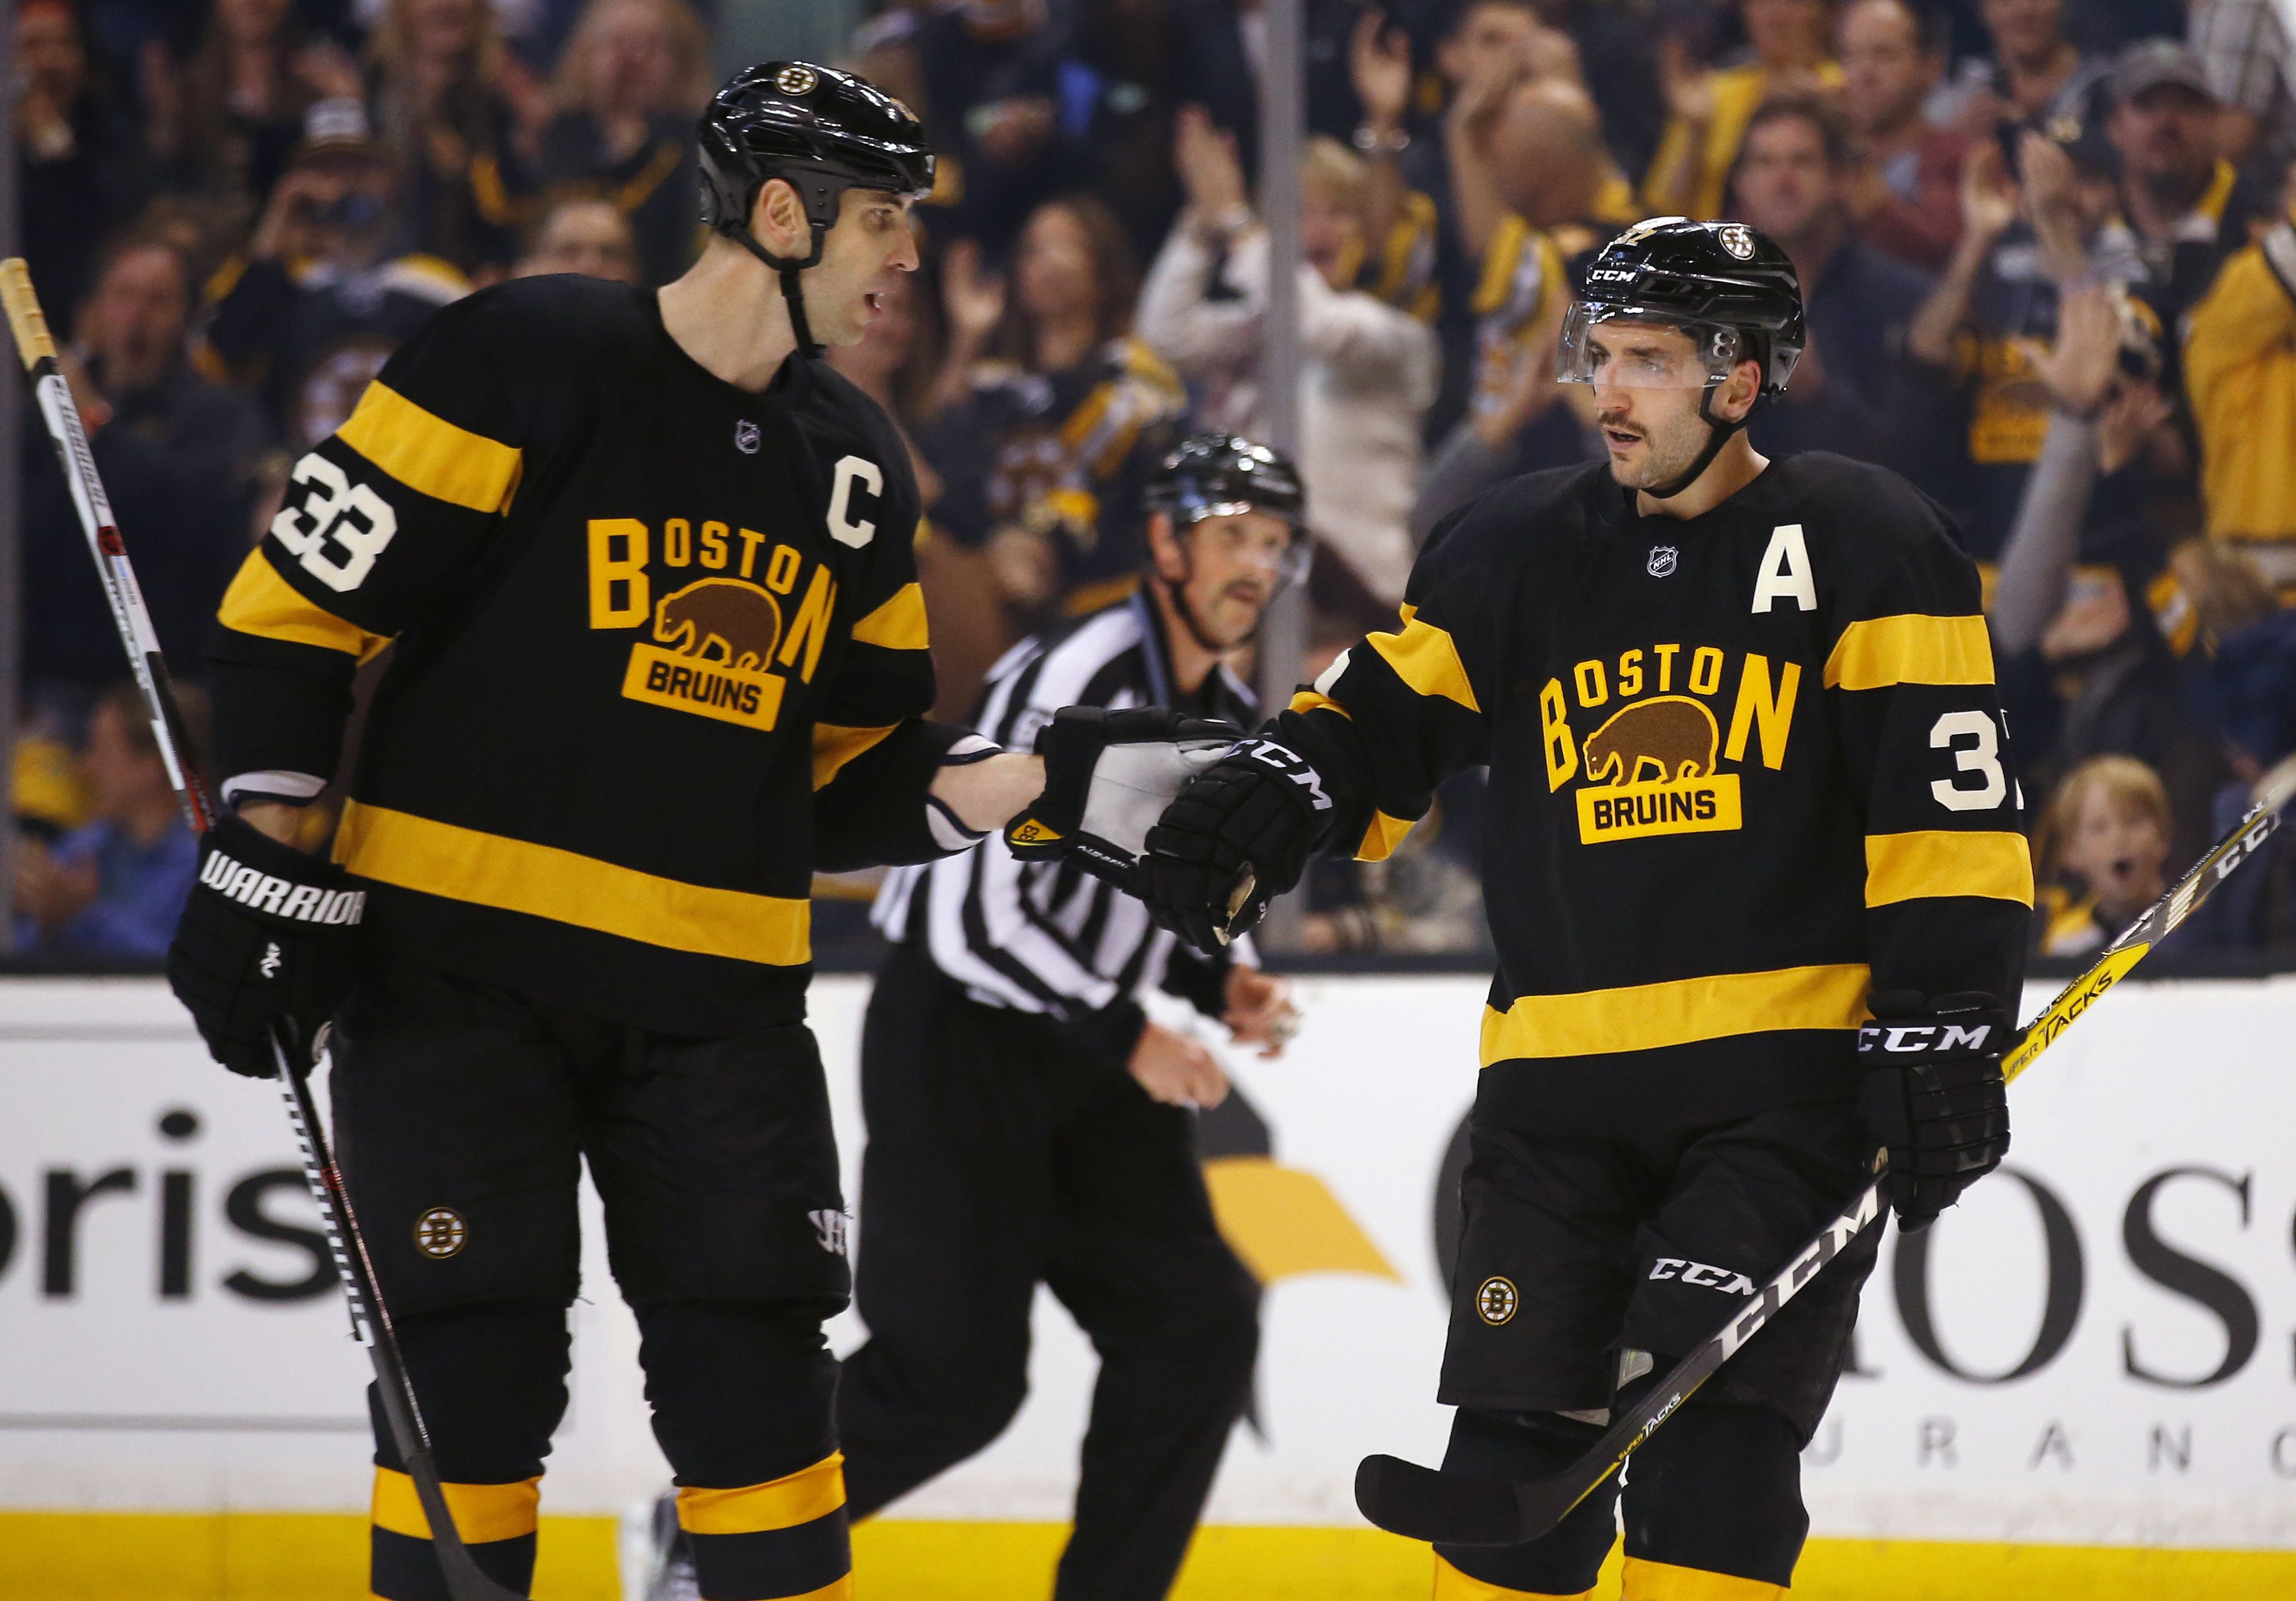 Tuukka Rask Boston Bruins Black Home Stitched NHL Hockey Jersey